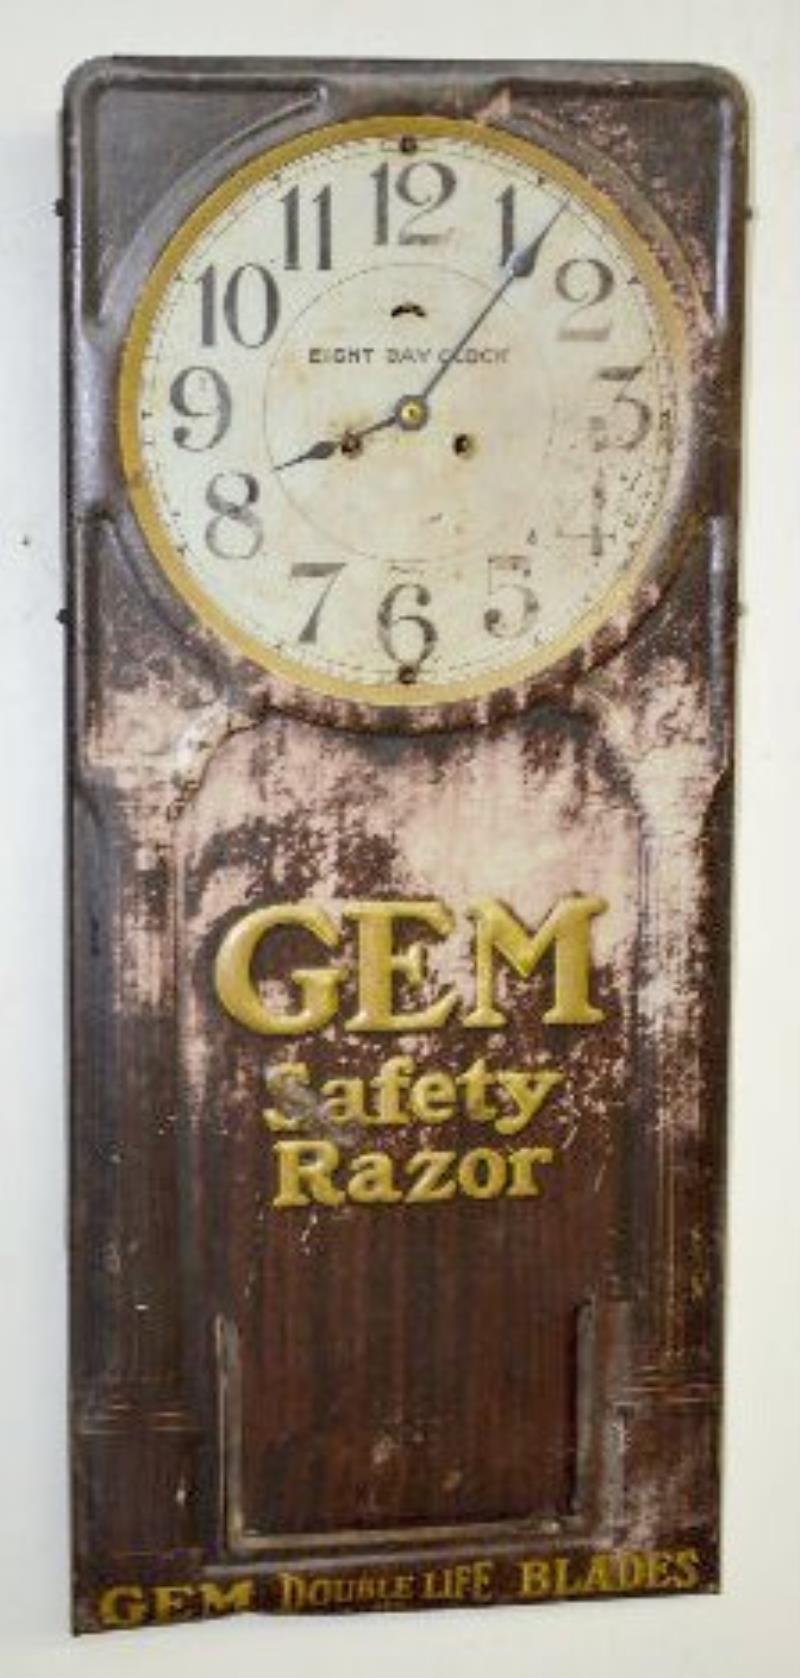 American Safety Razor Advertising Clock